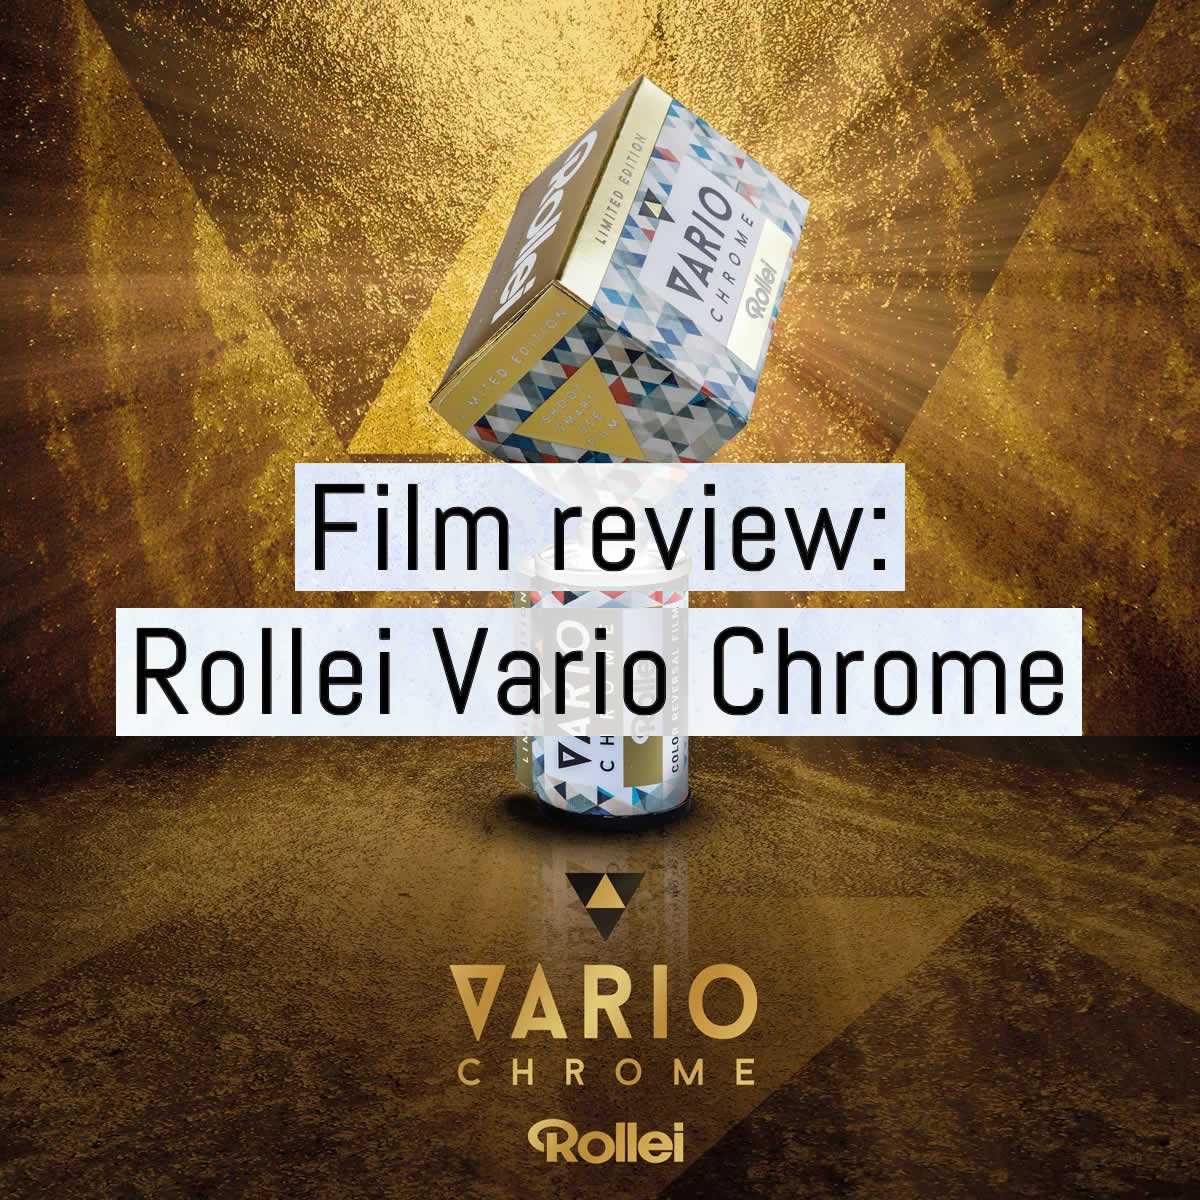 Film review: Rollei Vario Chrome